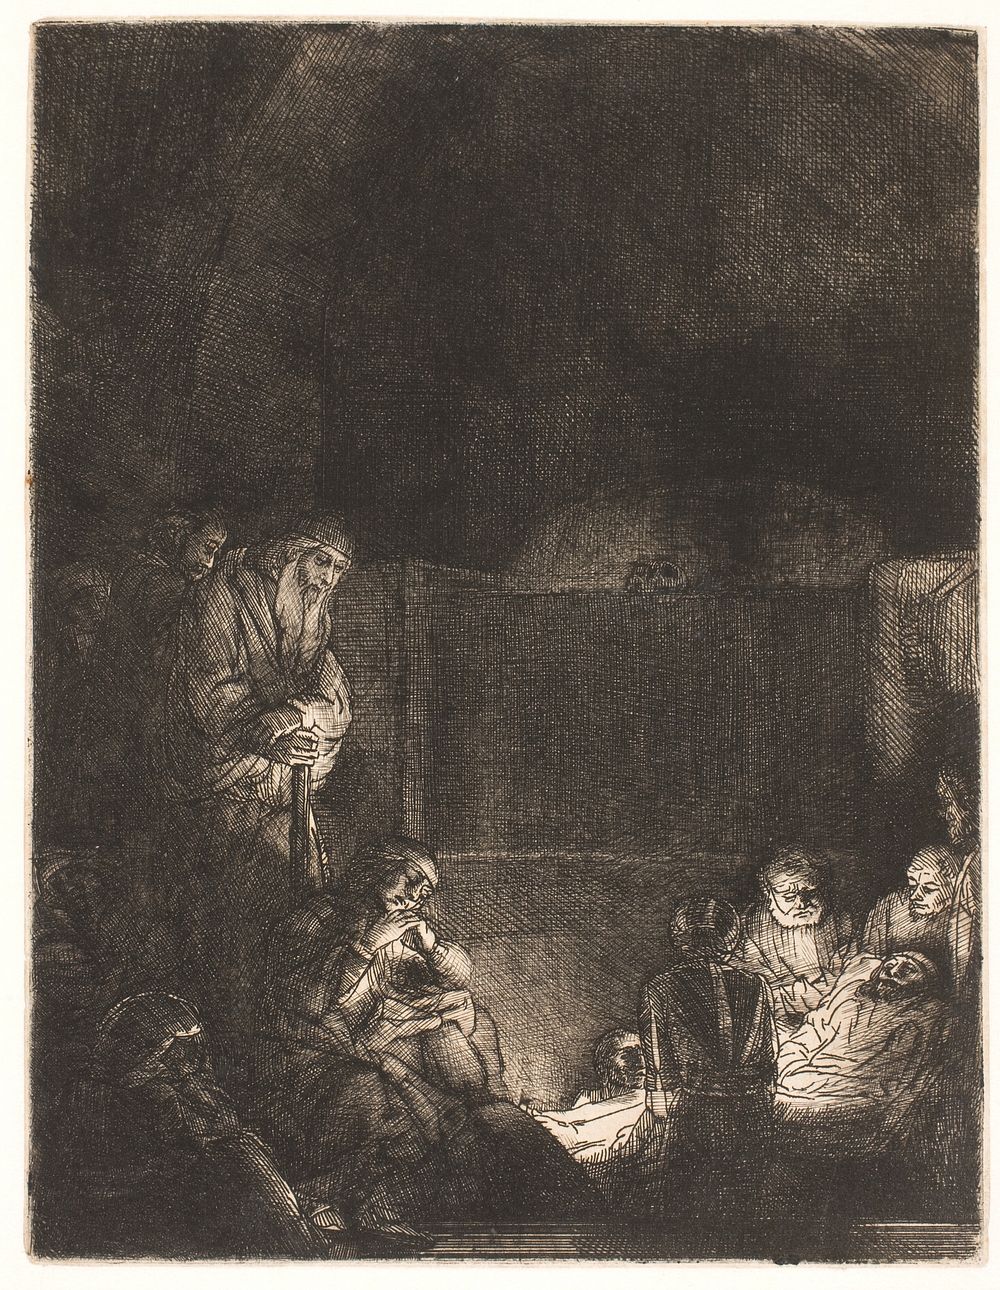 The entombment by Rembrandt van Rijn